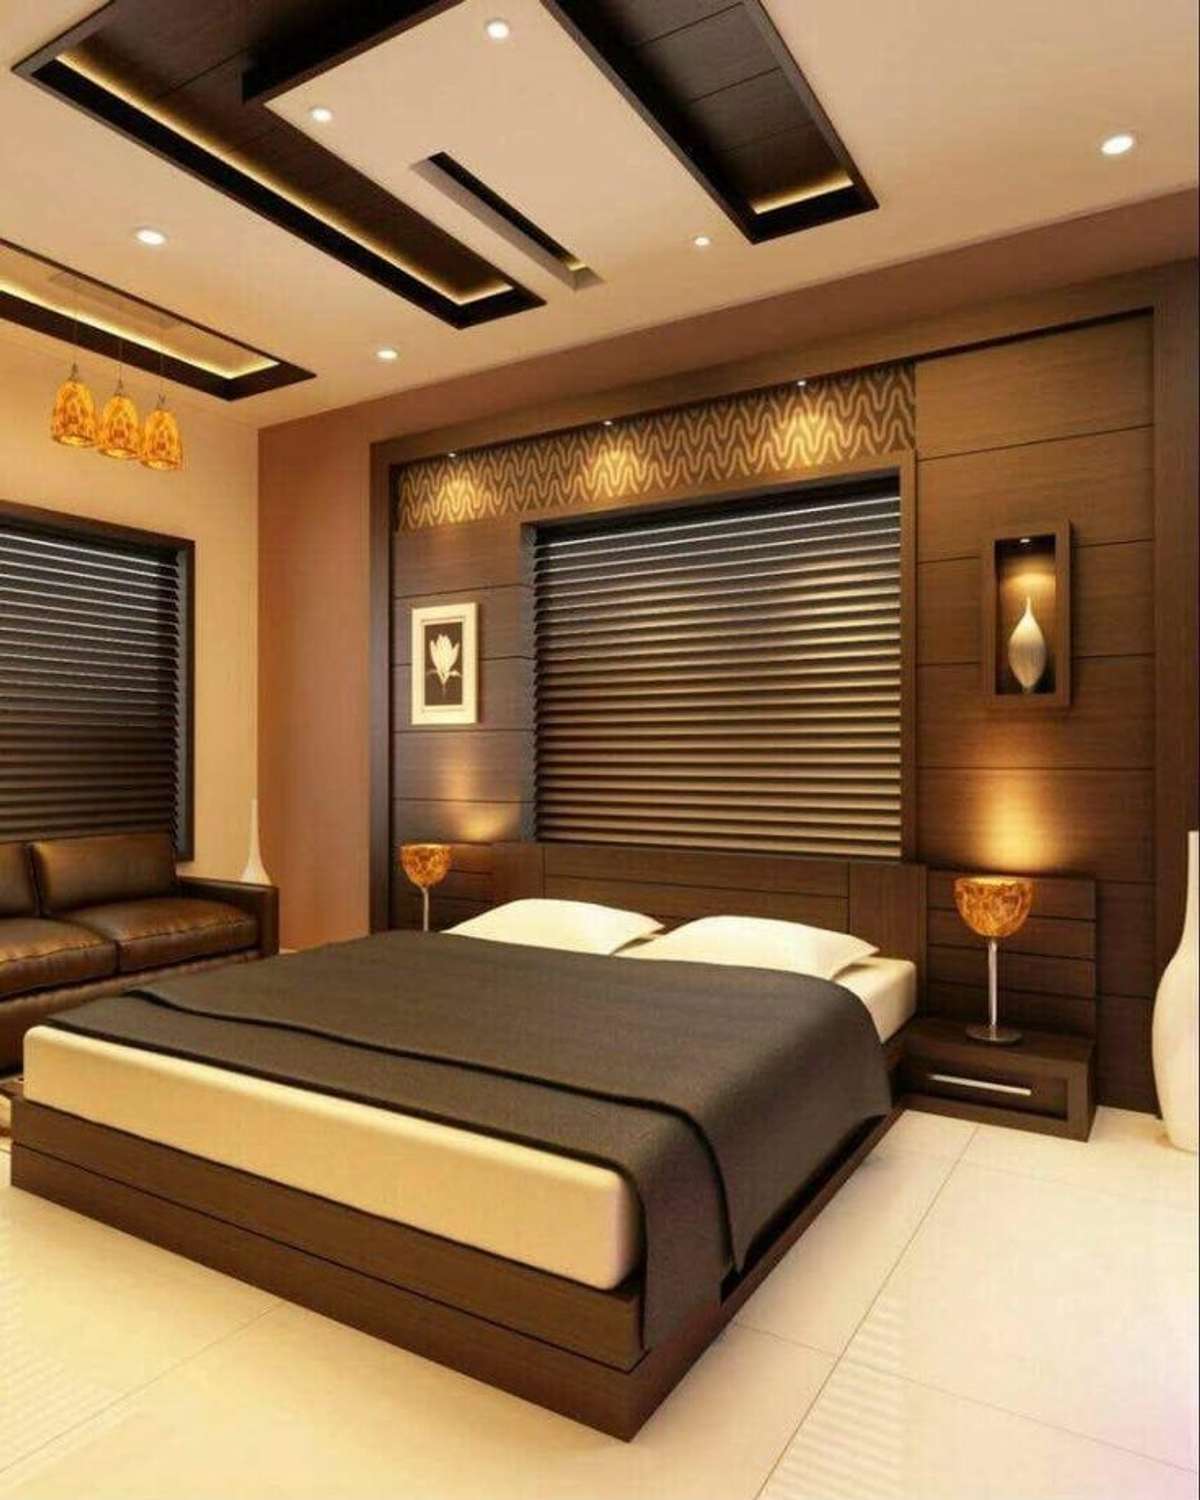 Bedroom interior
.
.
.
.
#lighting #bedroominterior #interior #designer #InteriorDesigner #flooring #roofdesign #FalseCeiling #wall #moulding